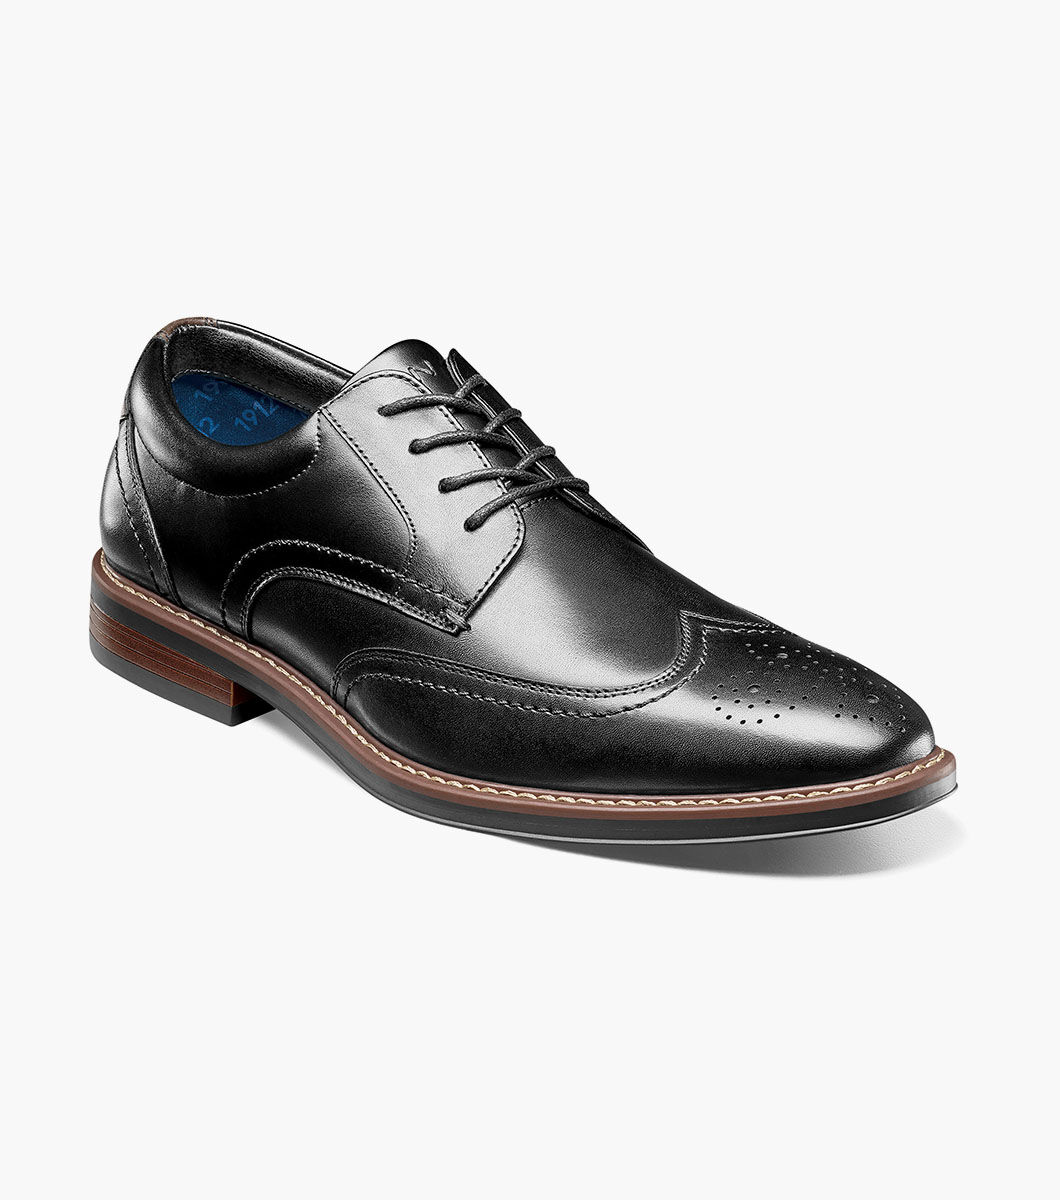 Nunn Bush Shoes Centro Flex Wingtip Oxford Black Size 14